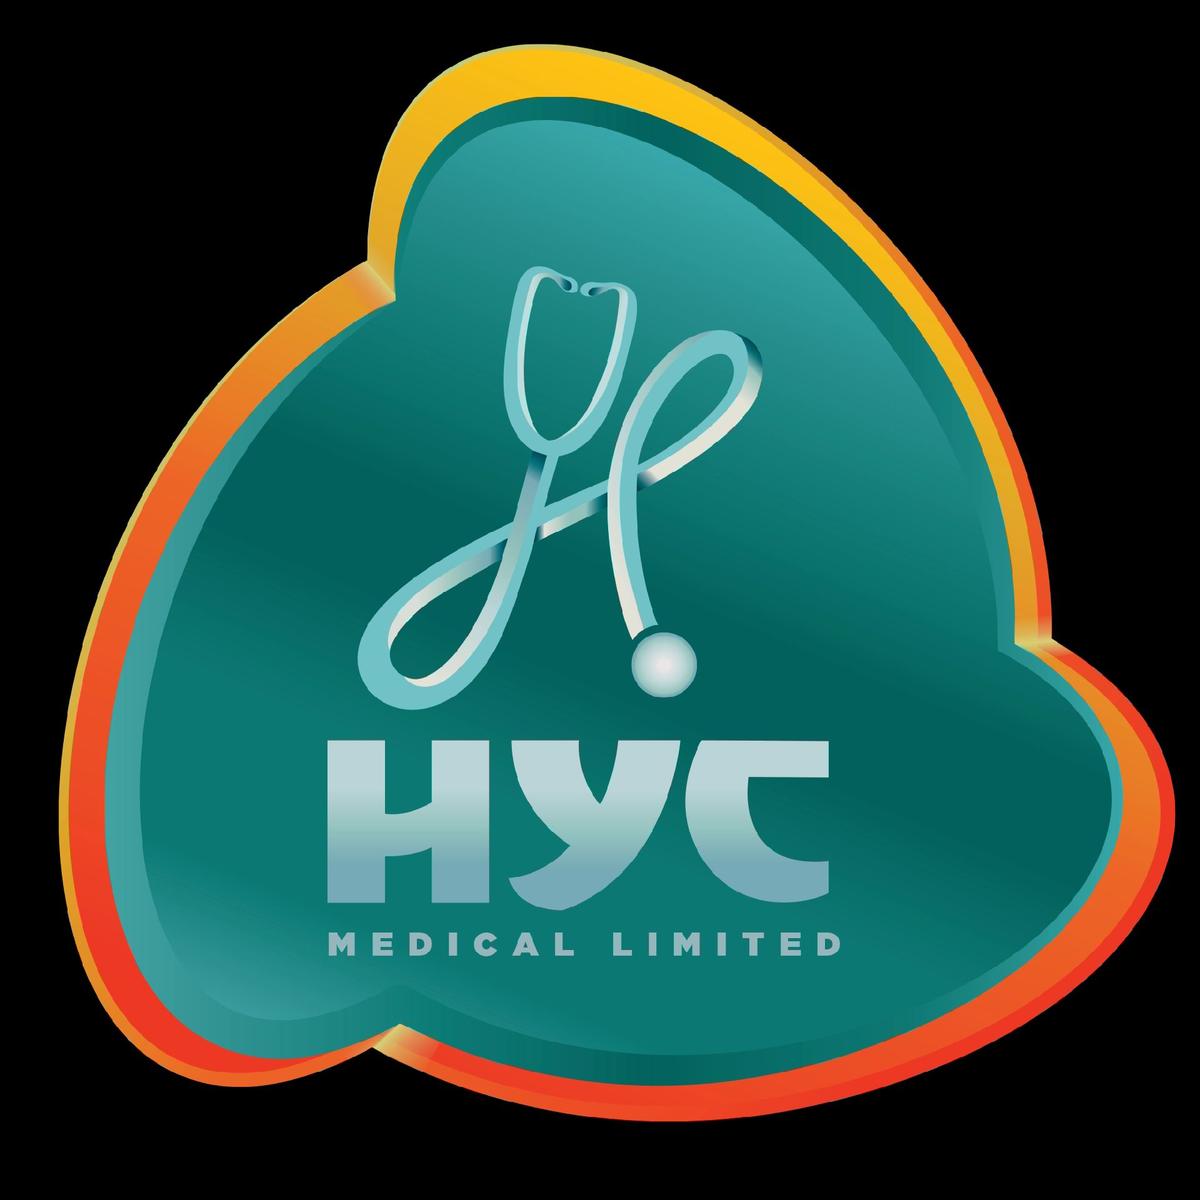 HYC MEDICAL JA